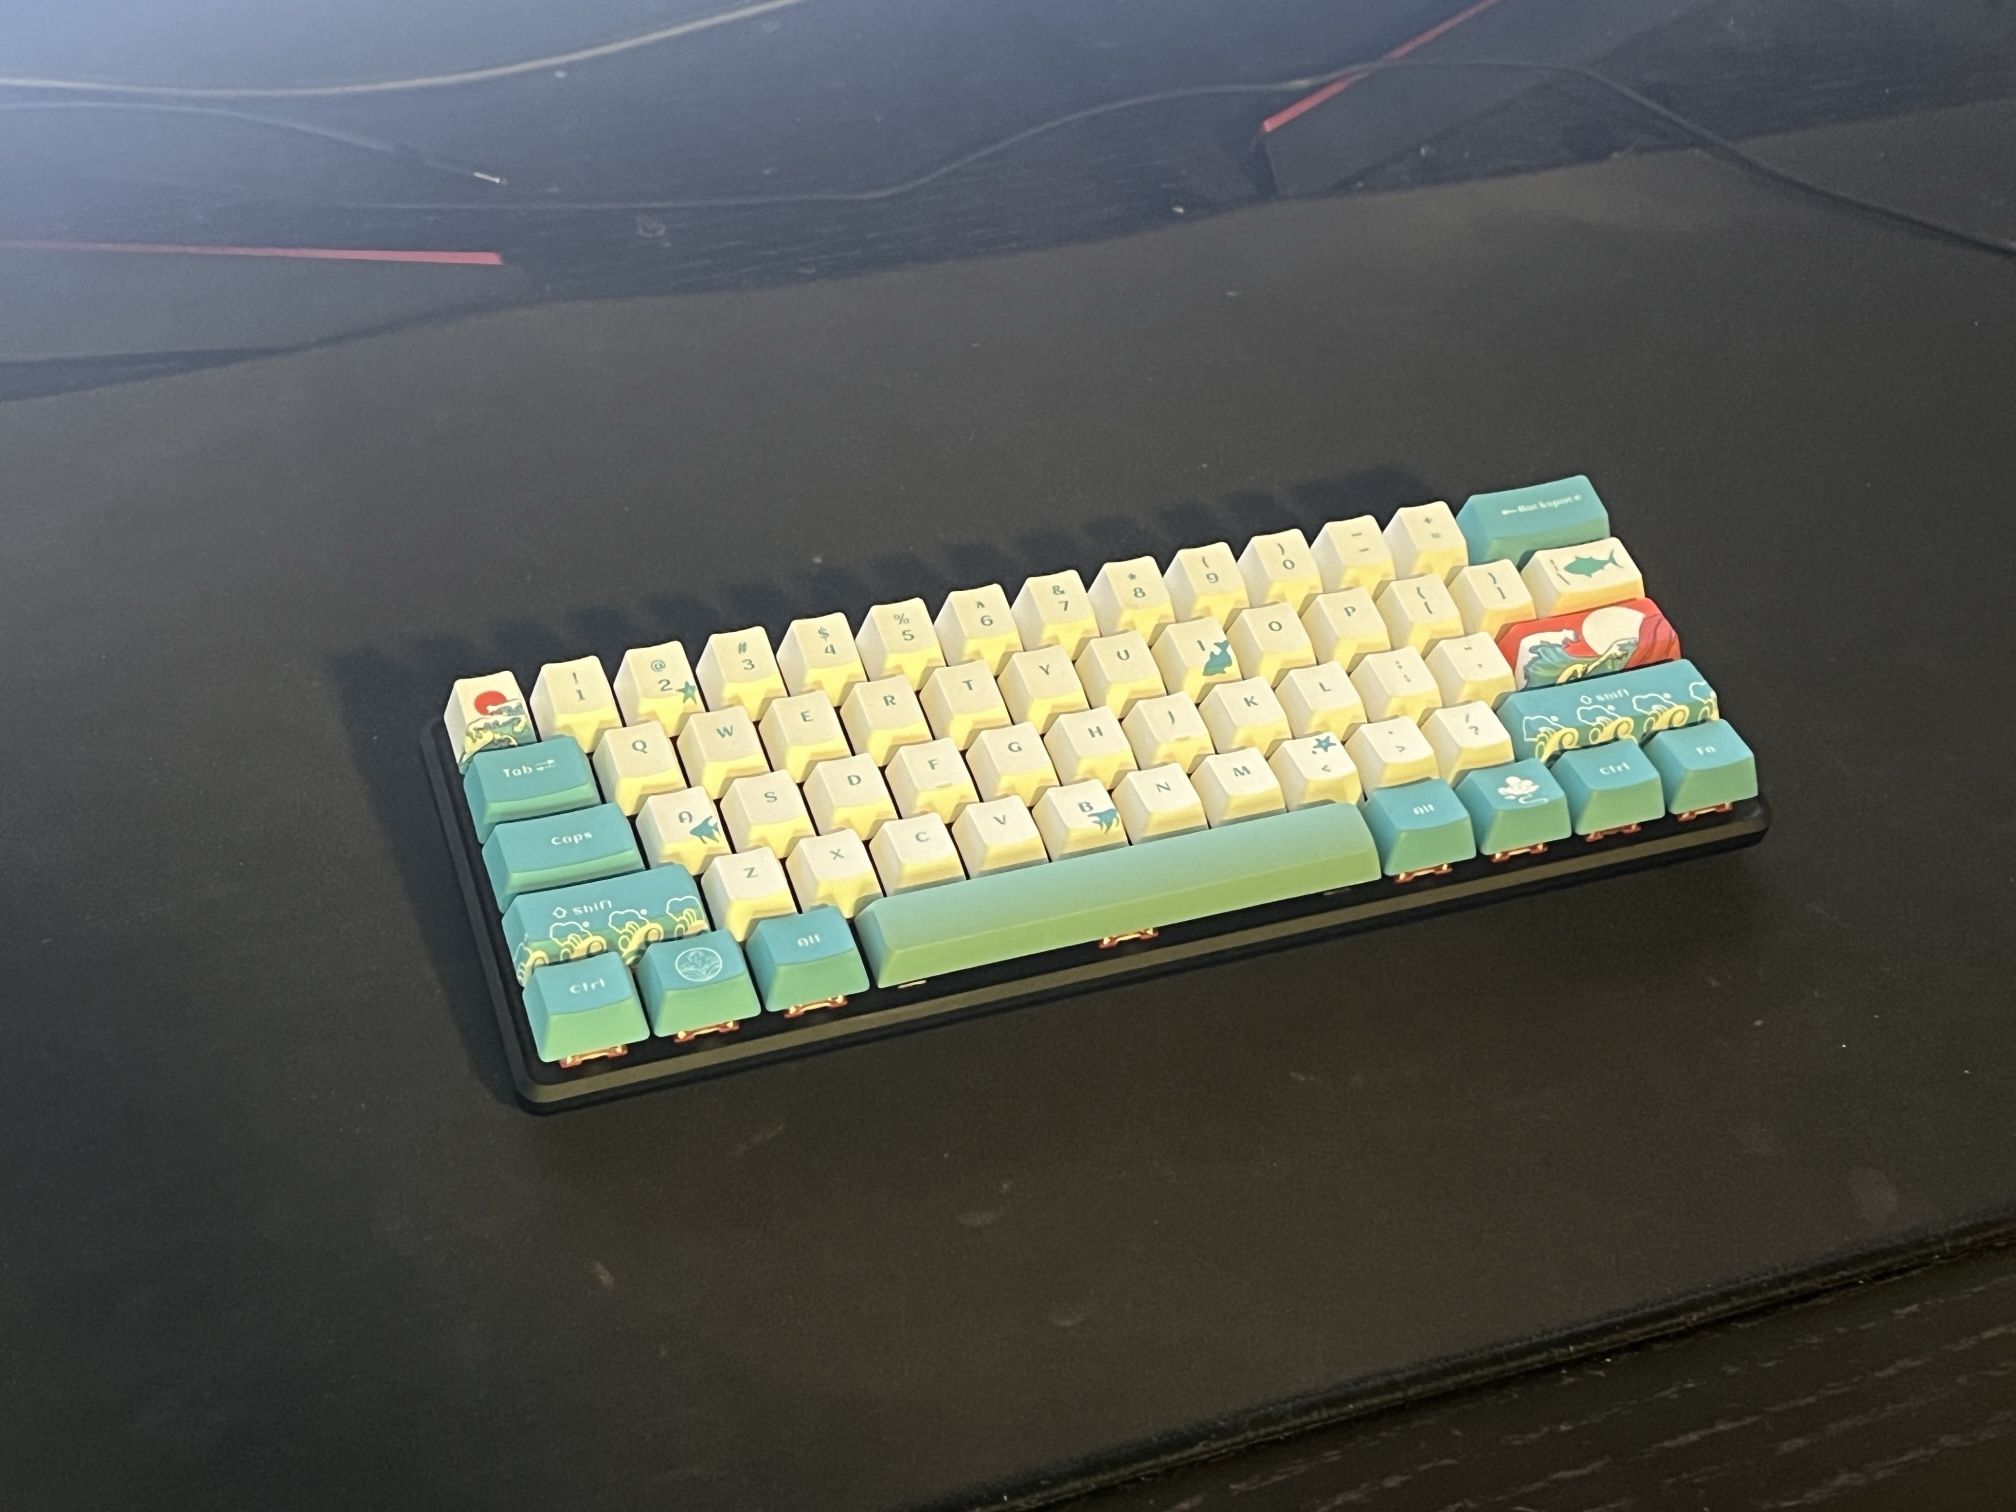 HyperX 60% Mechanical Keyboard